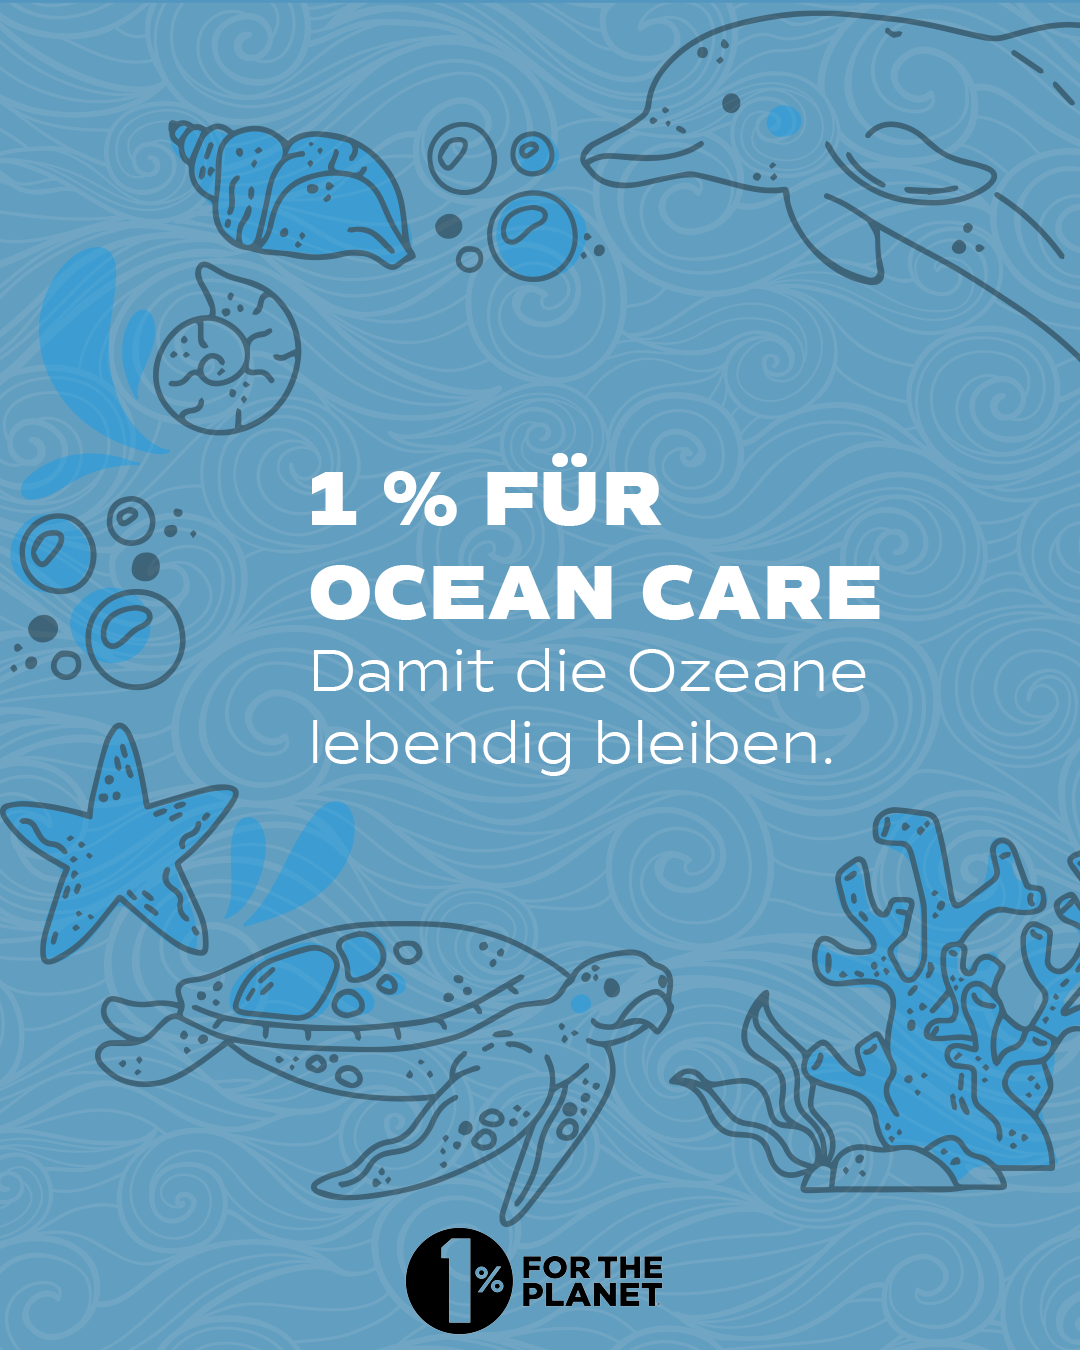 Am 8. Juni ist World Oceans Day